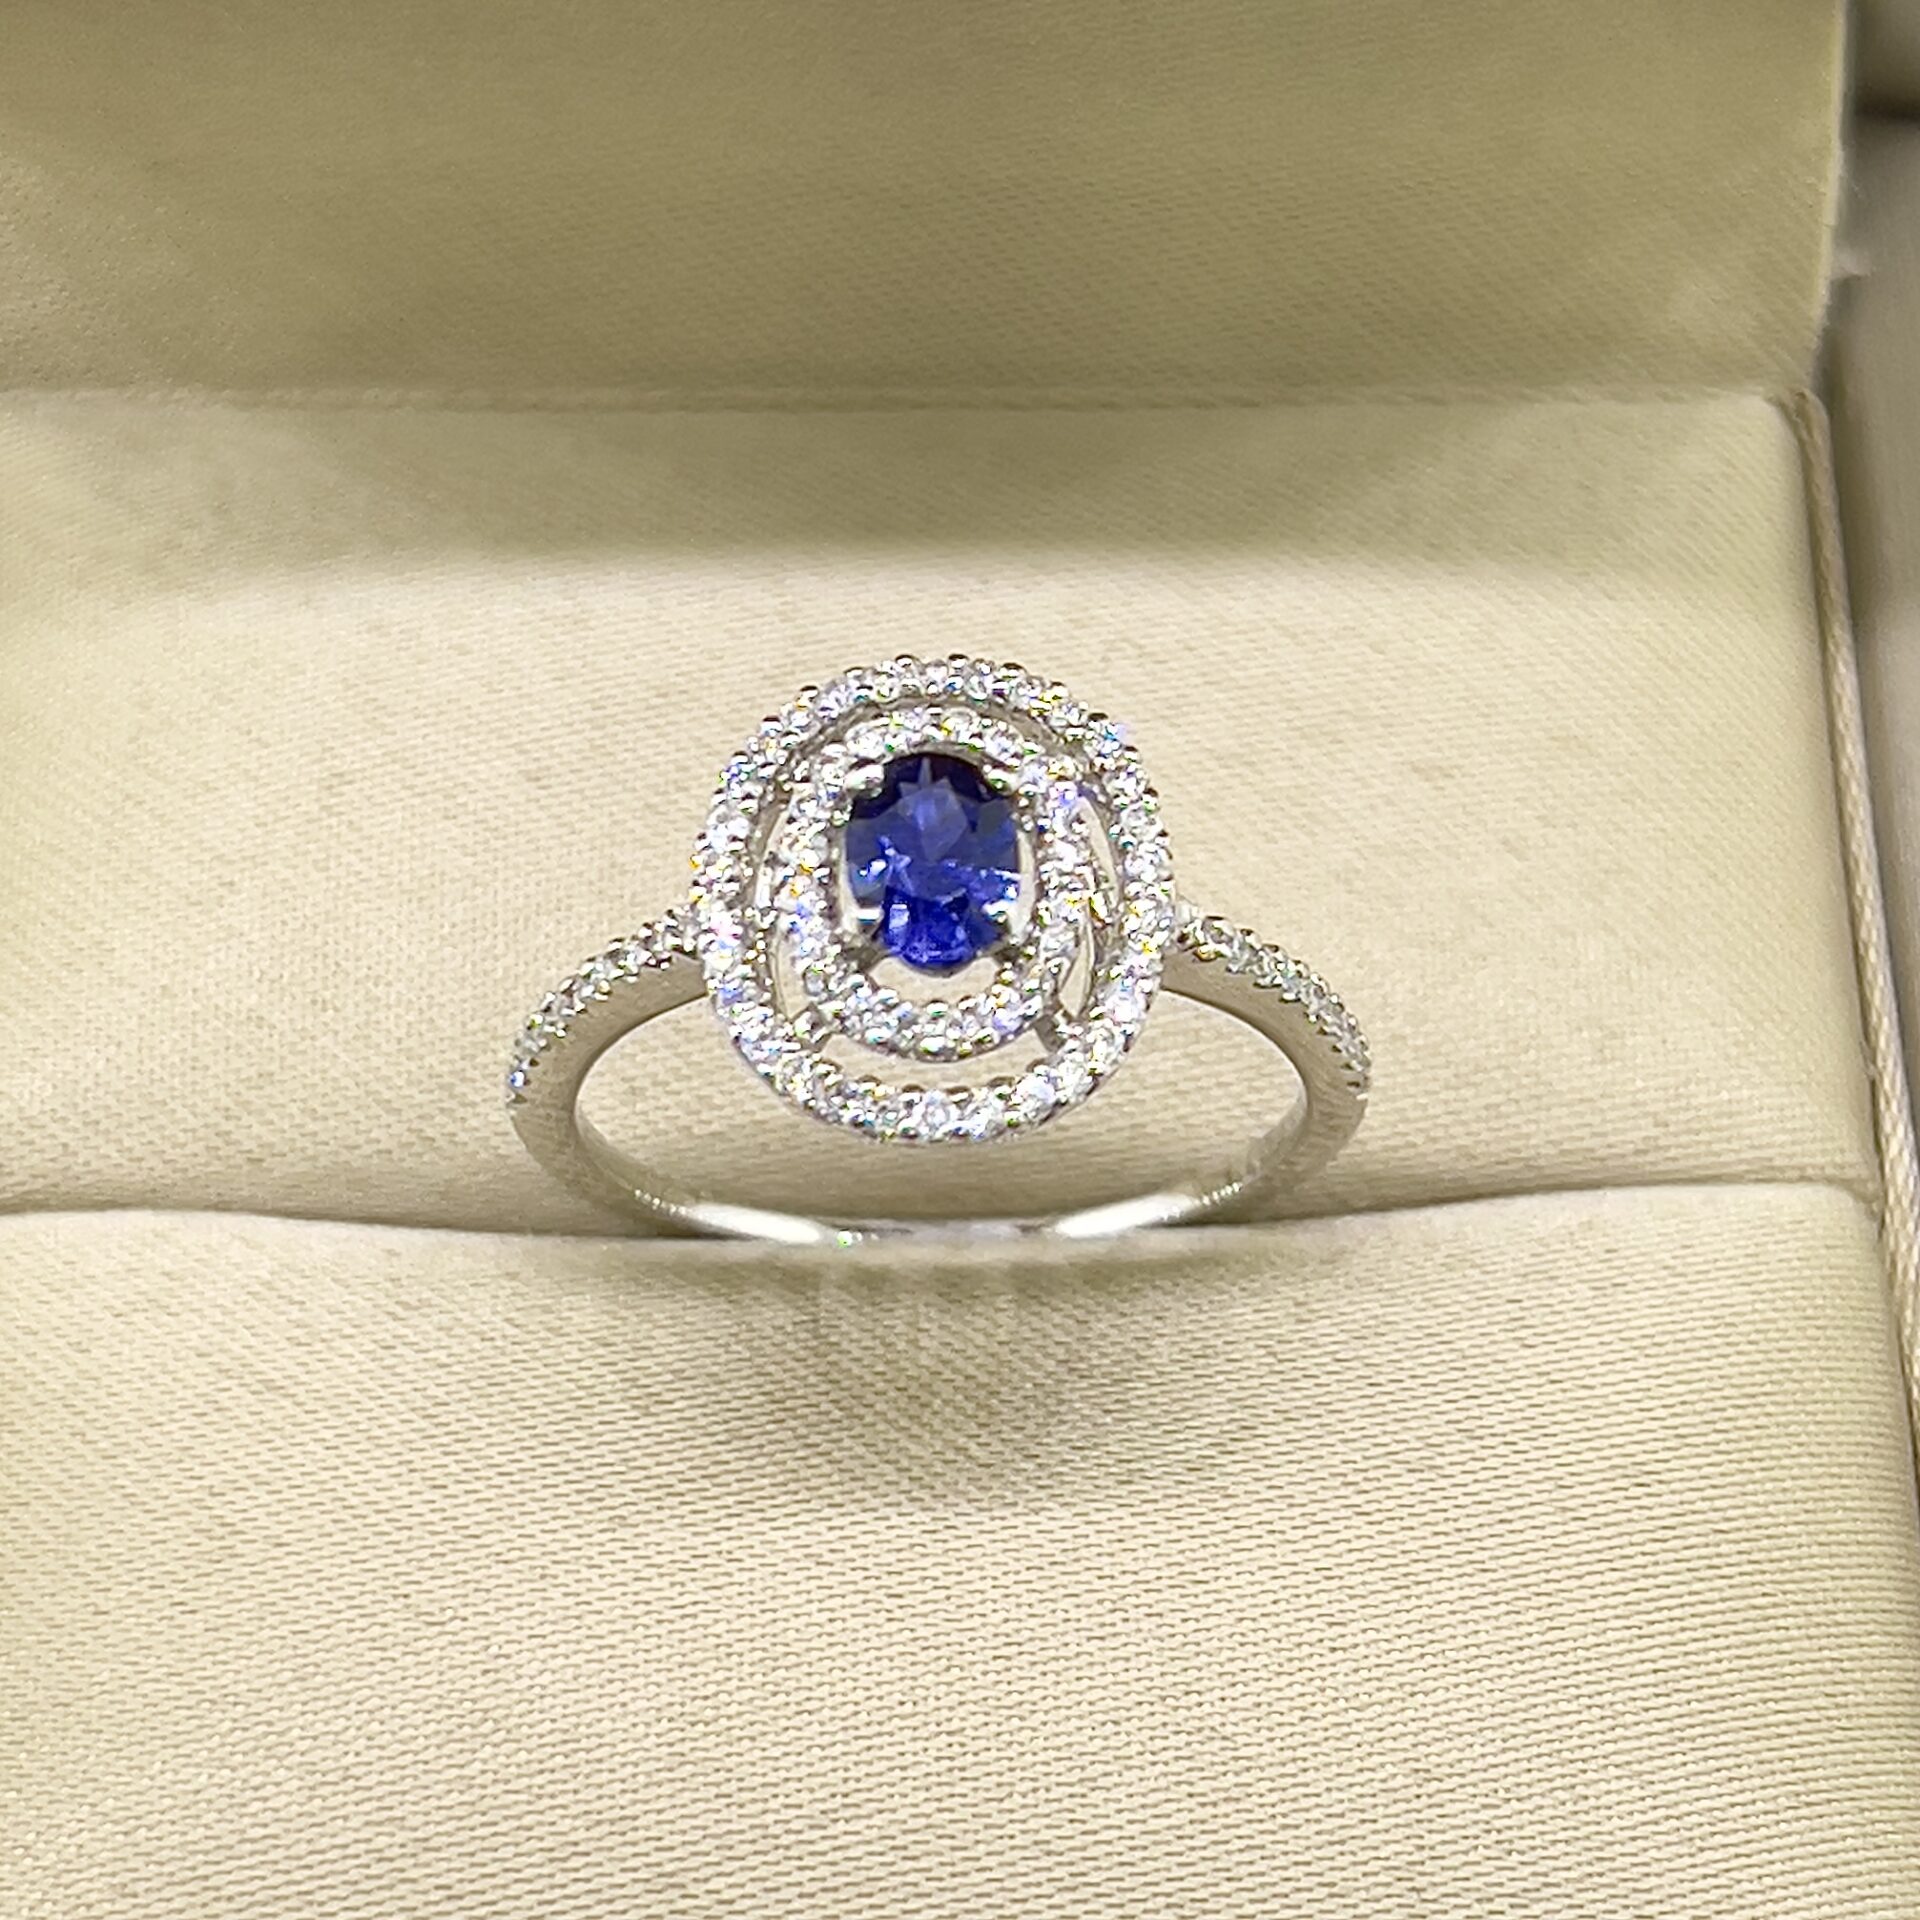 Christie's Sets $50M Price Tag for Blue Diamond